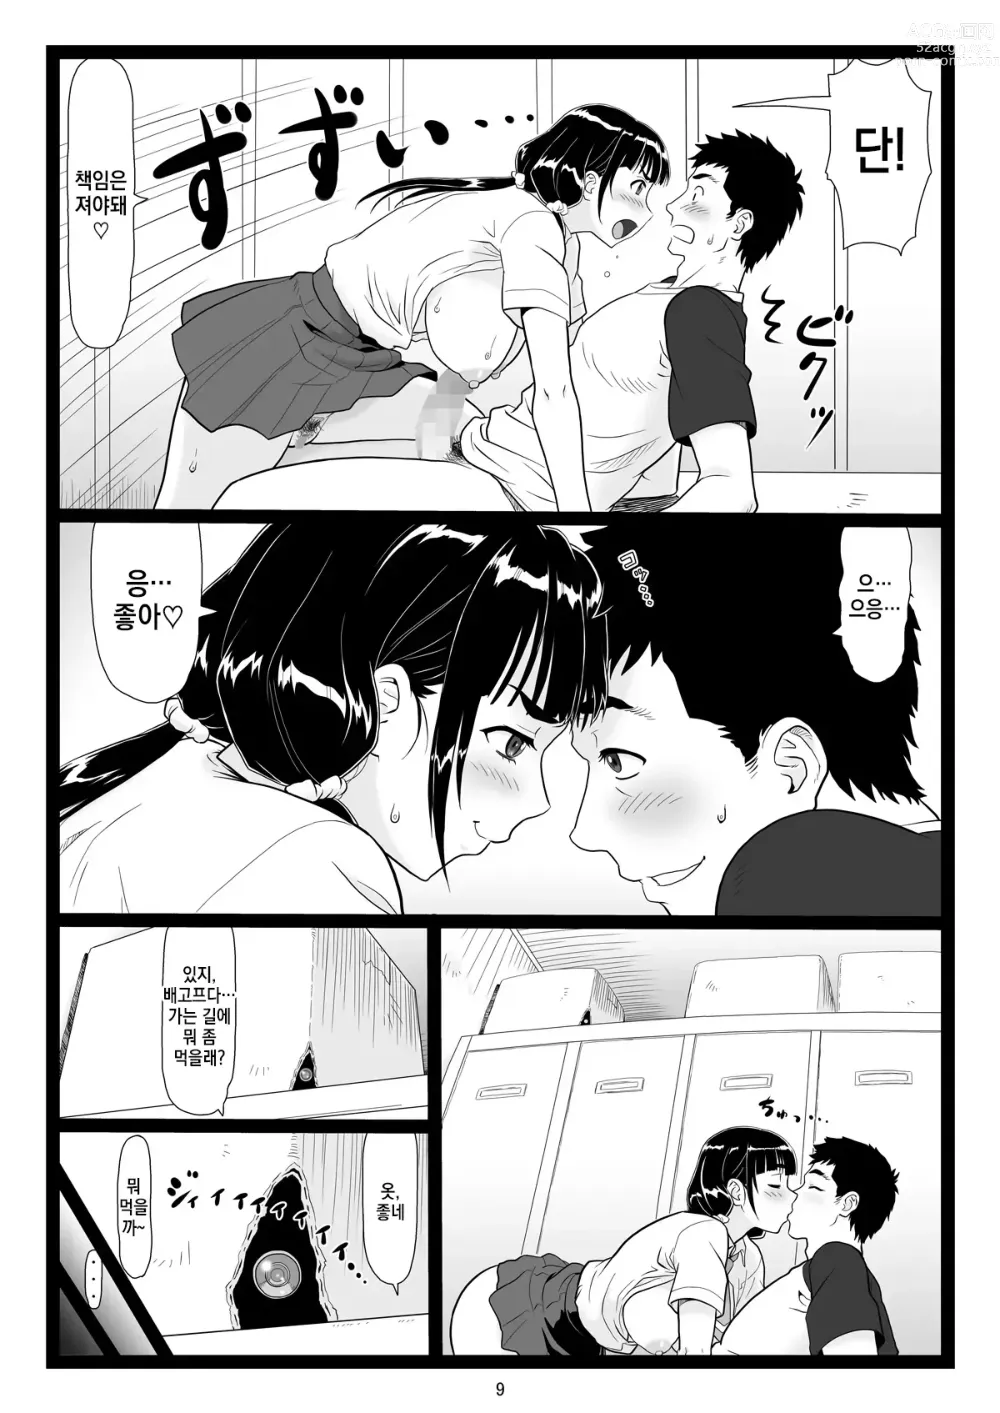 Page 9 of doujinshi Tawawa de Akarui Yakyuubu Manager ga Inshitsu na Kyoushi no Wana ni...